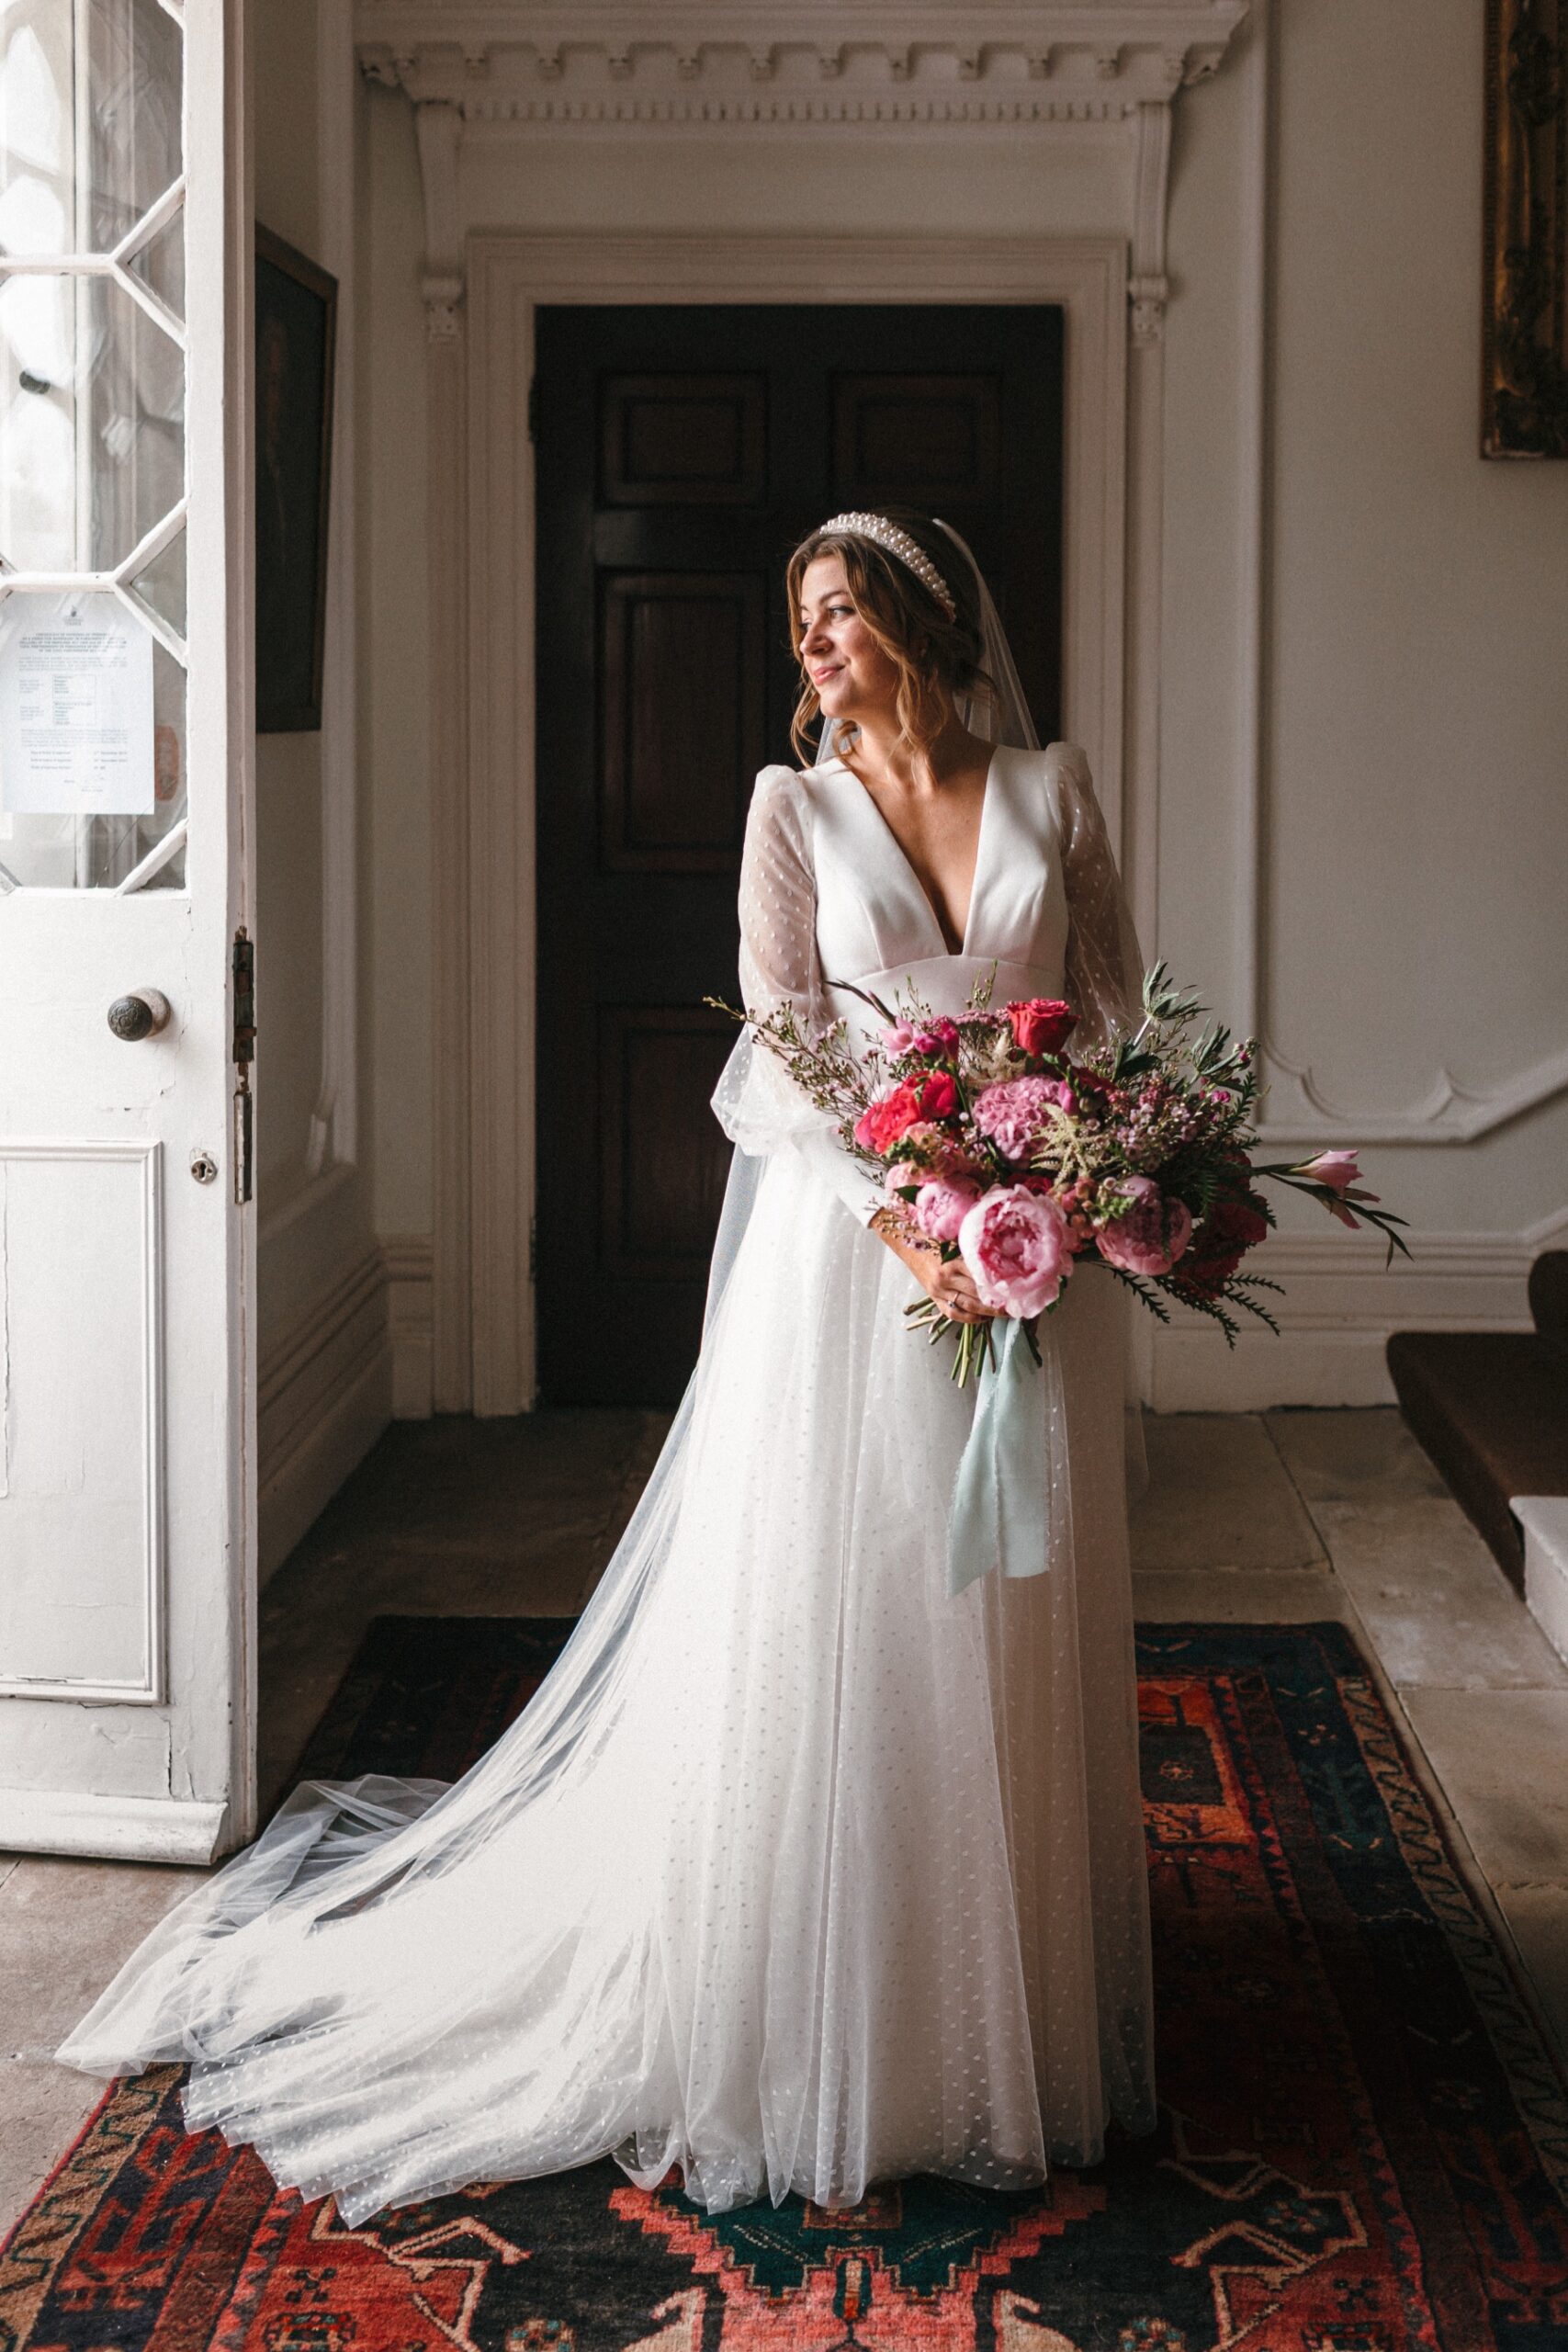 Bridal Portraits captured by Wedding photographer Devon & Cornwall_Freckle Photography